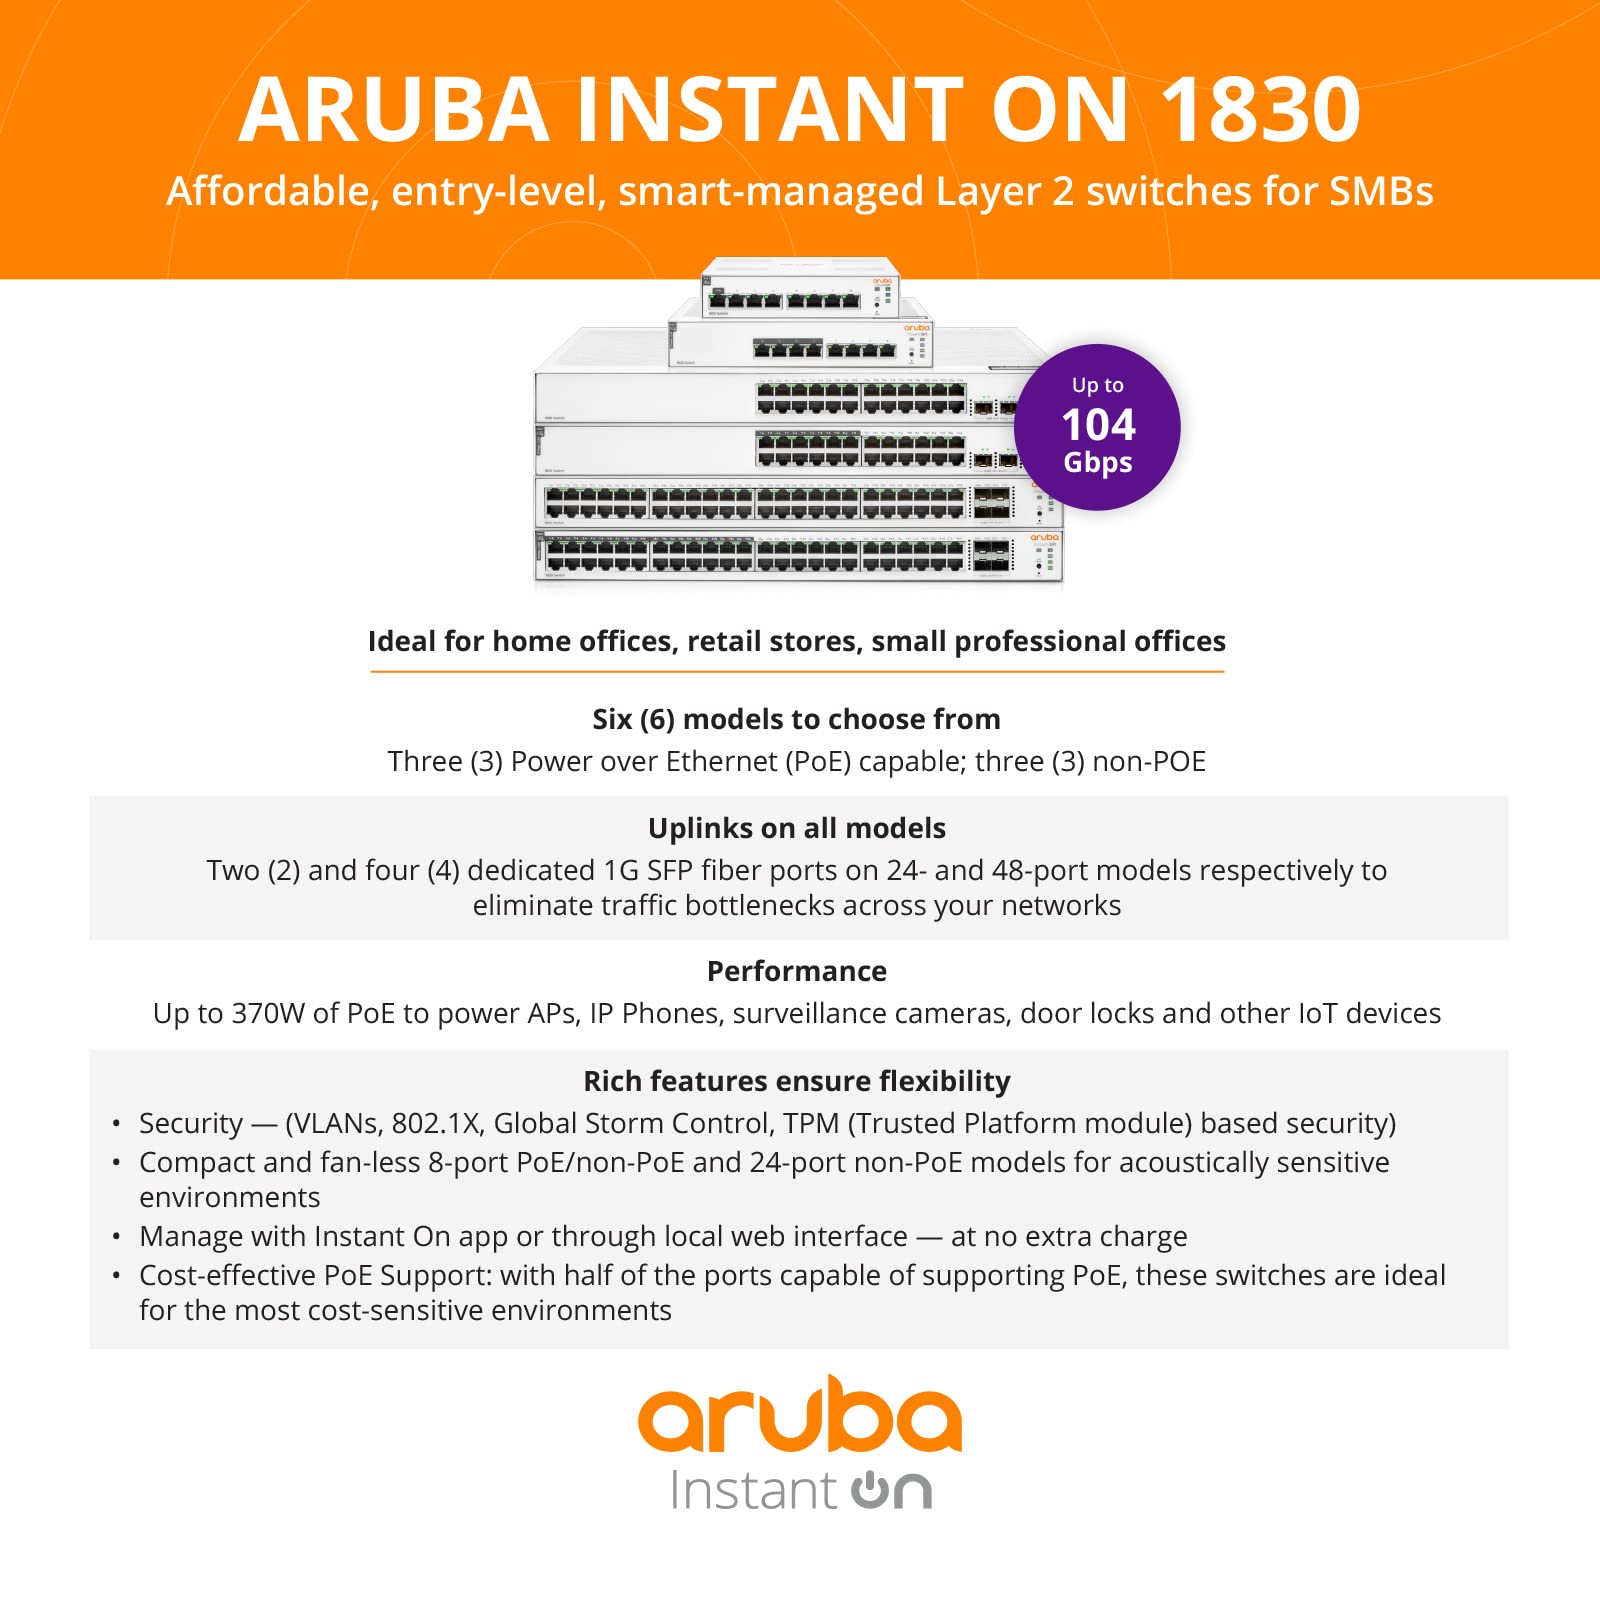 Aruba Instant On 1830 8-Port Gb Smart Switch | Fanless | US Cord (JL810A#ABA)